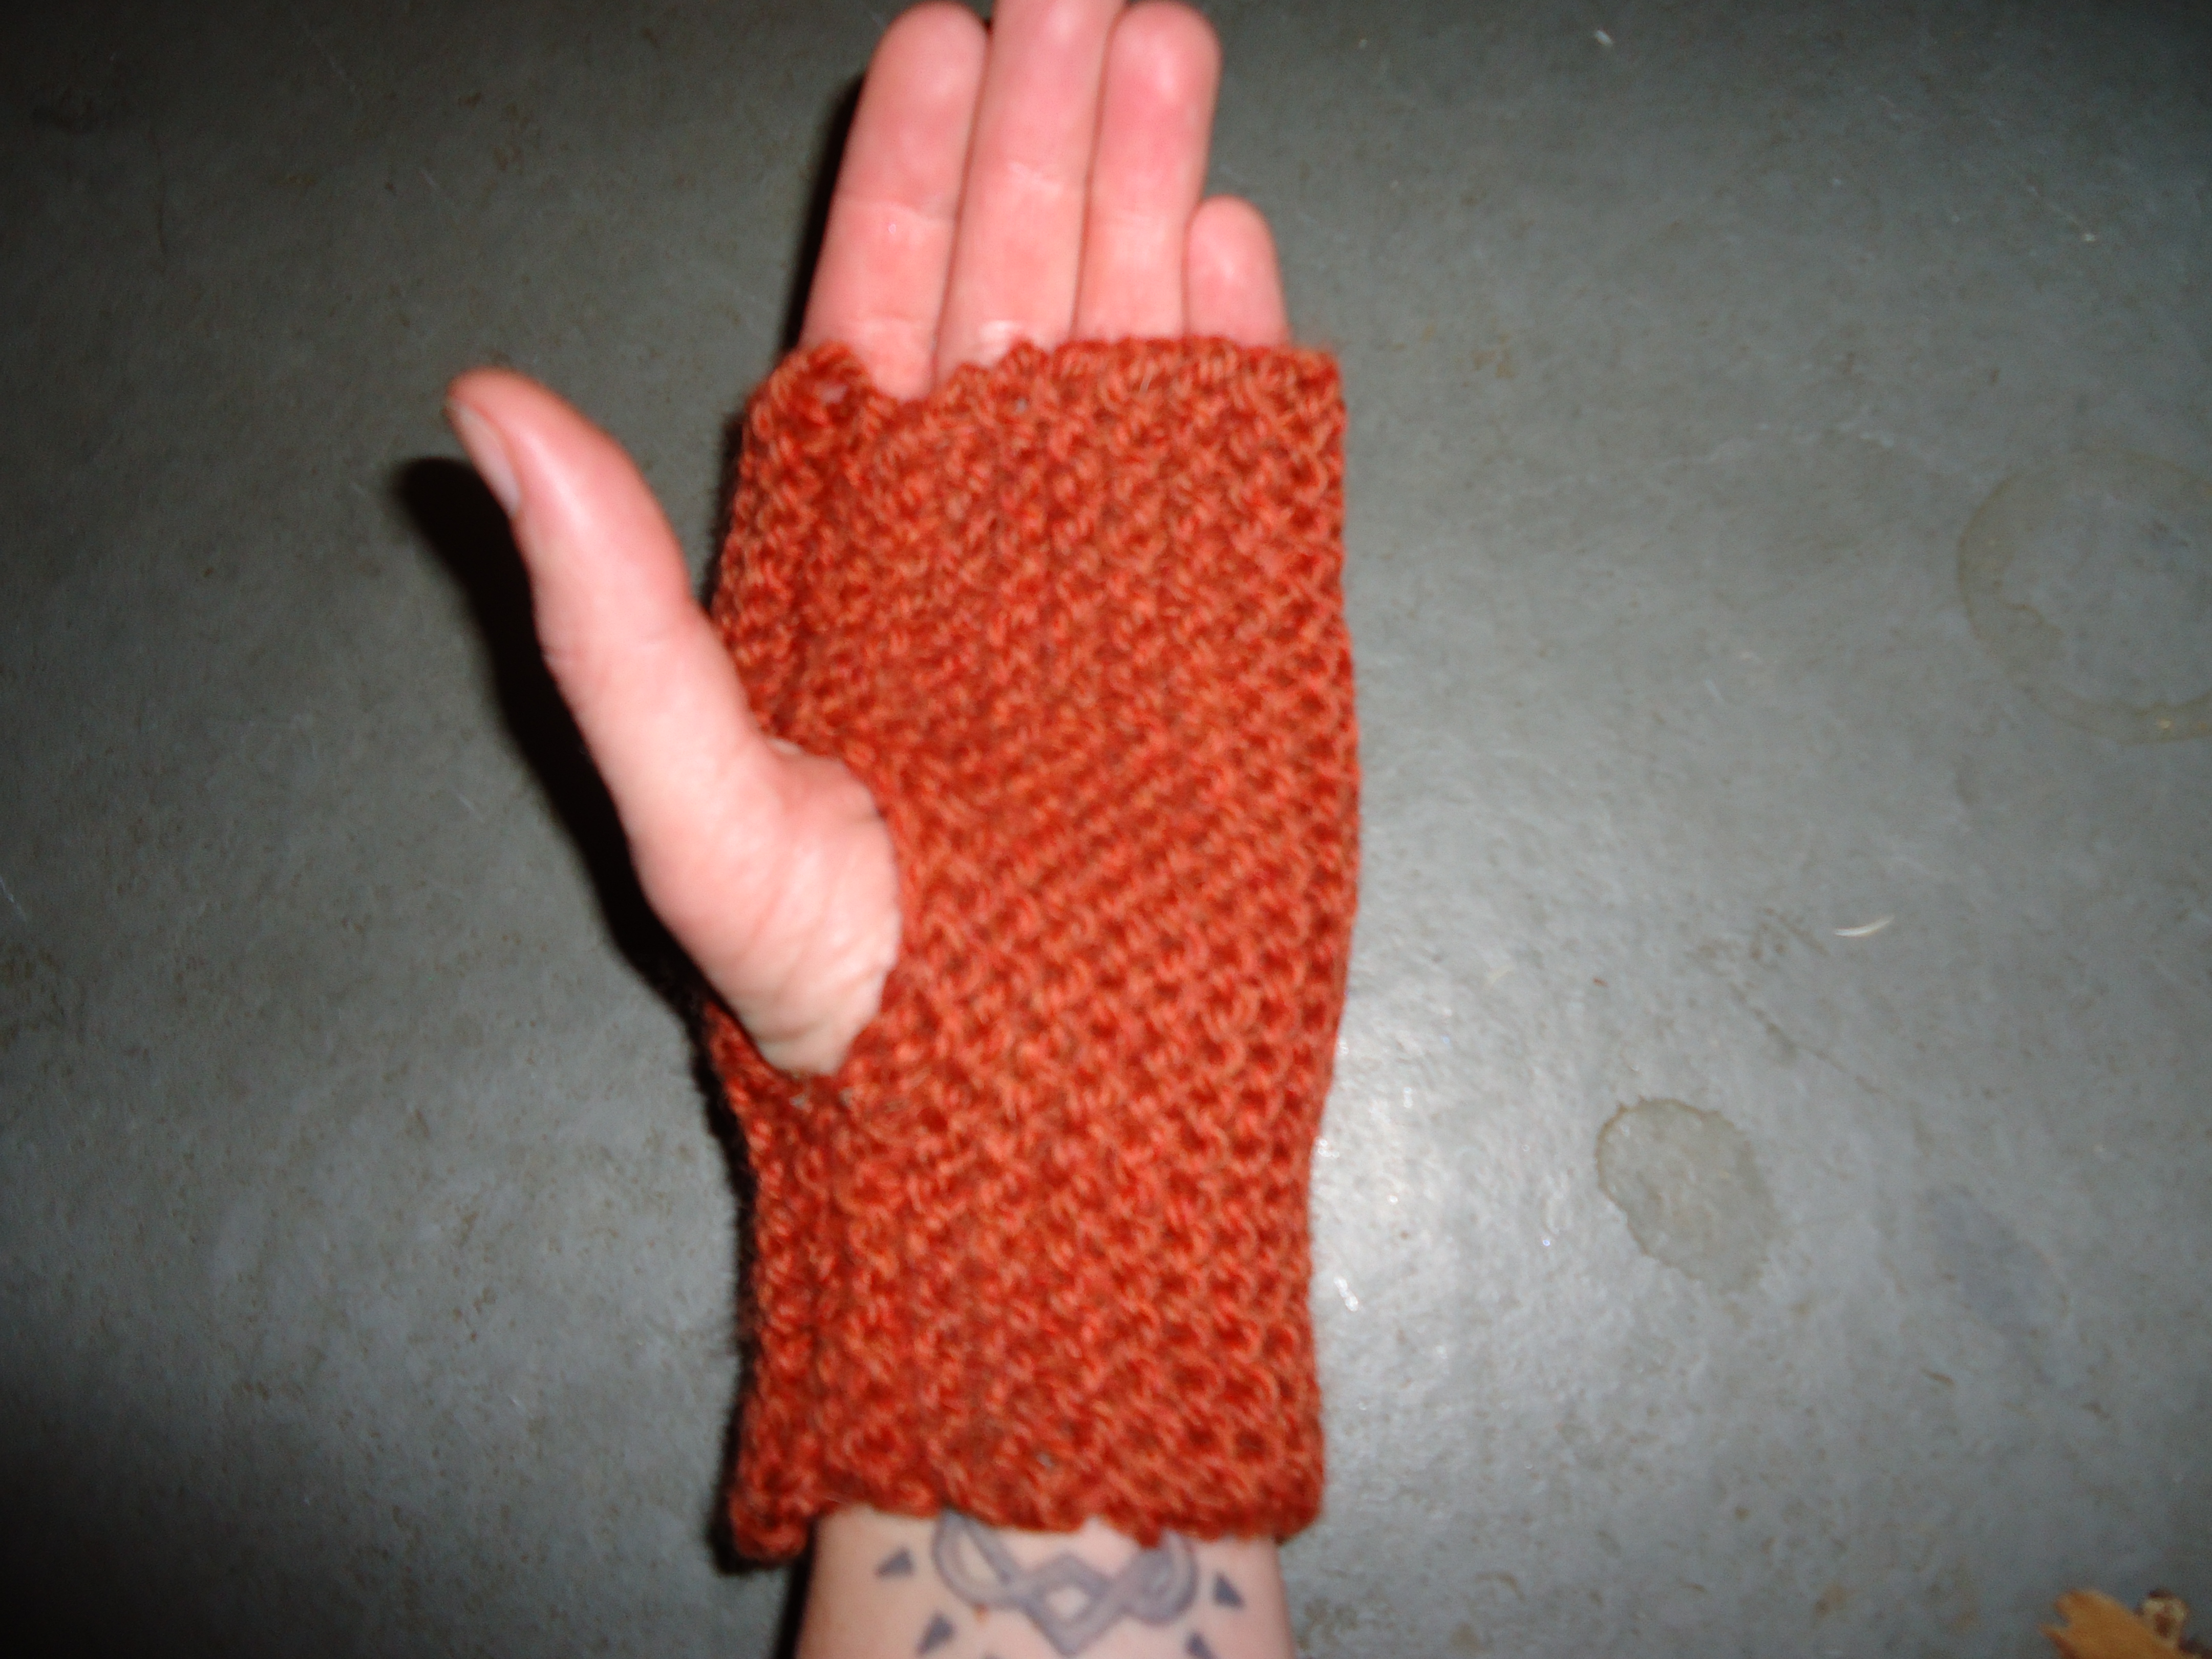 easy knit gloves